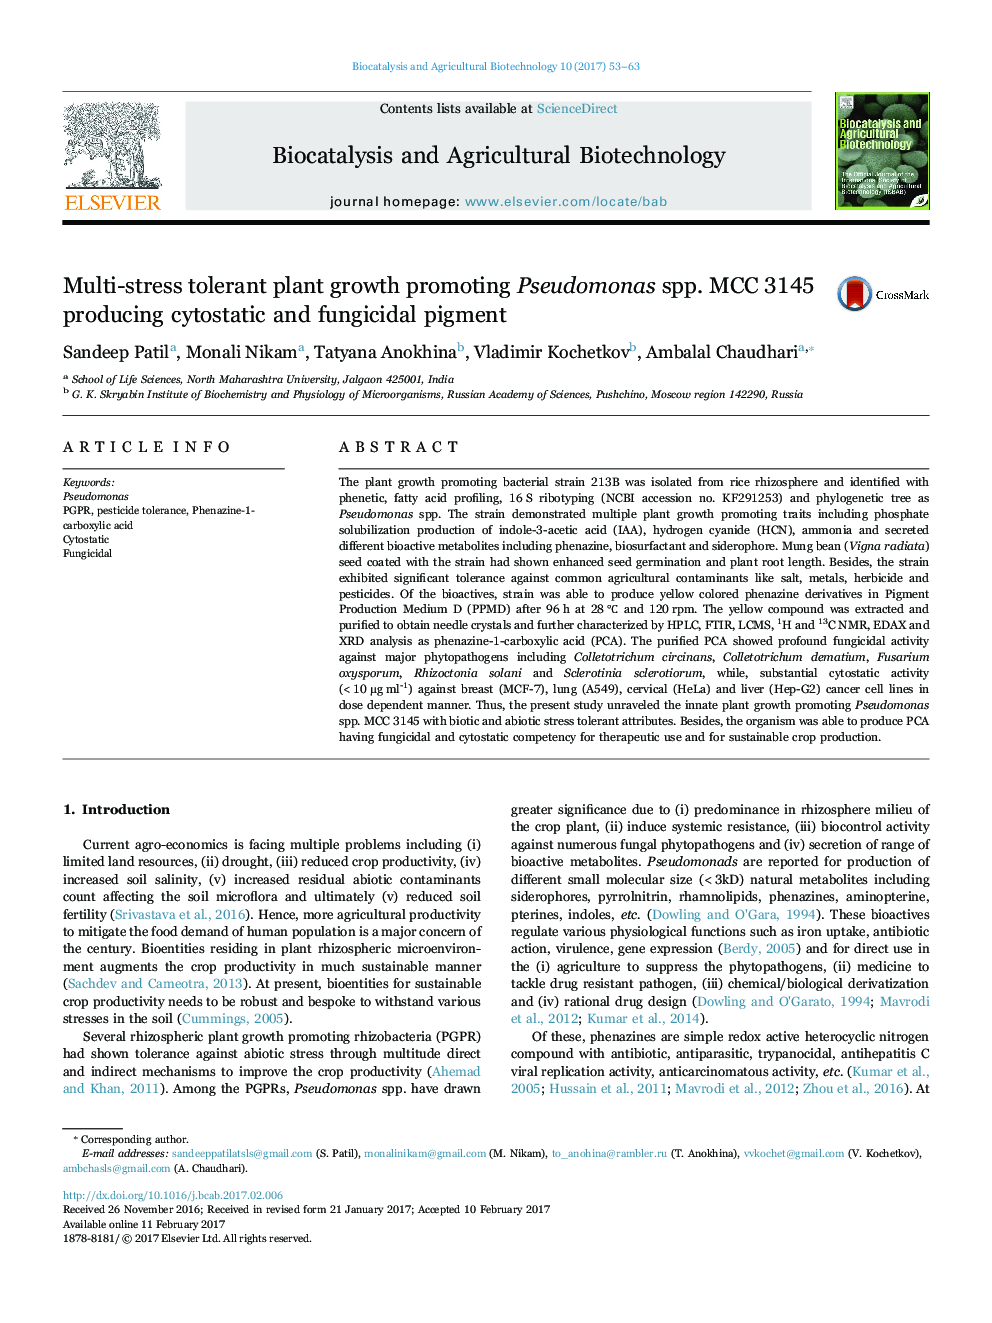 Multi-stress tolerant plant growth promoting Pseudomonas spp. MCC 3145 producing cytostatic and fungicidal pigment